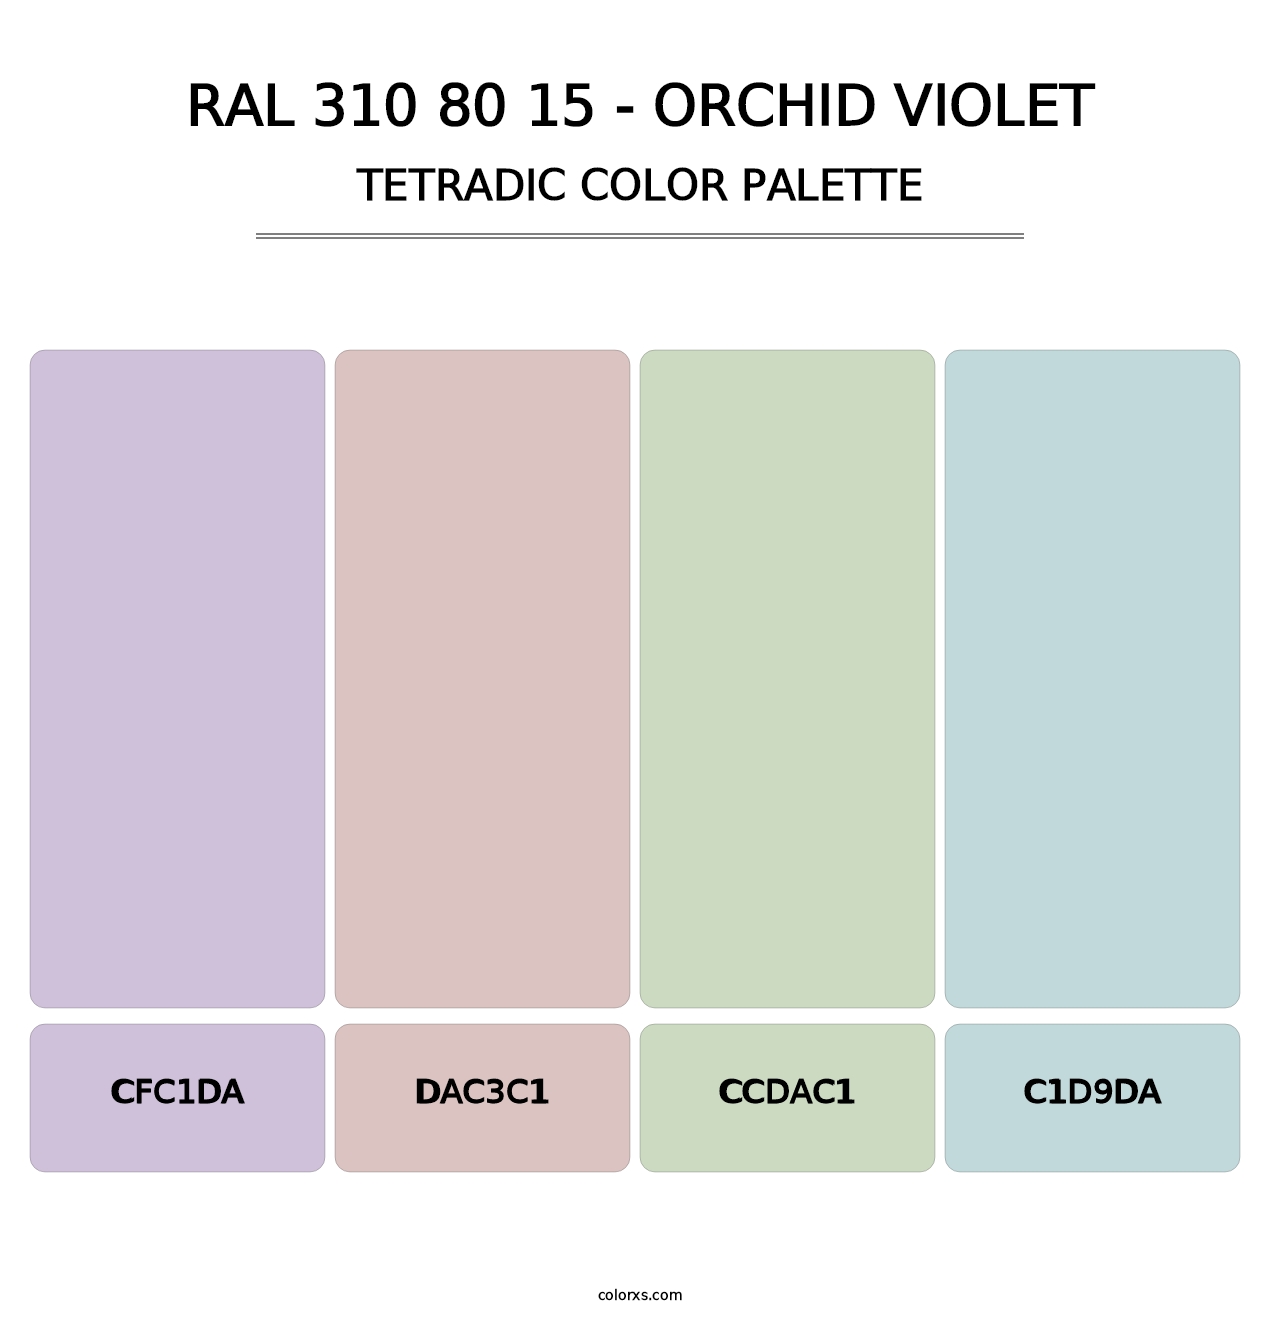 RAL 310 80 15 - Orchid Violet - Tetradic Color Palette